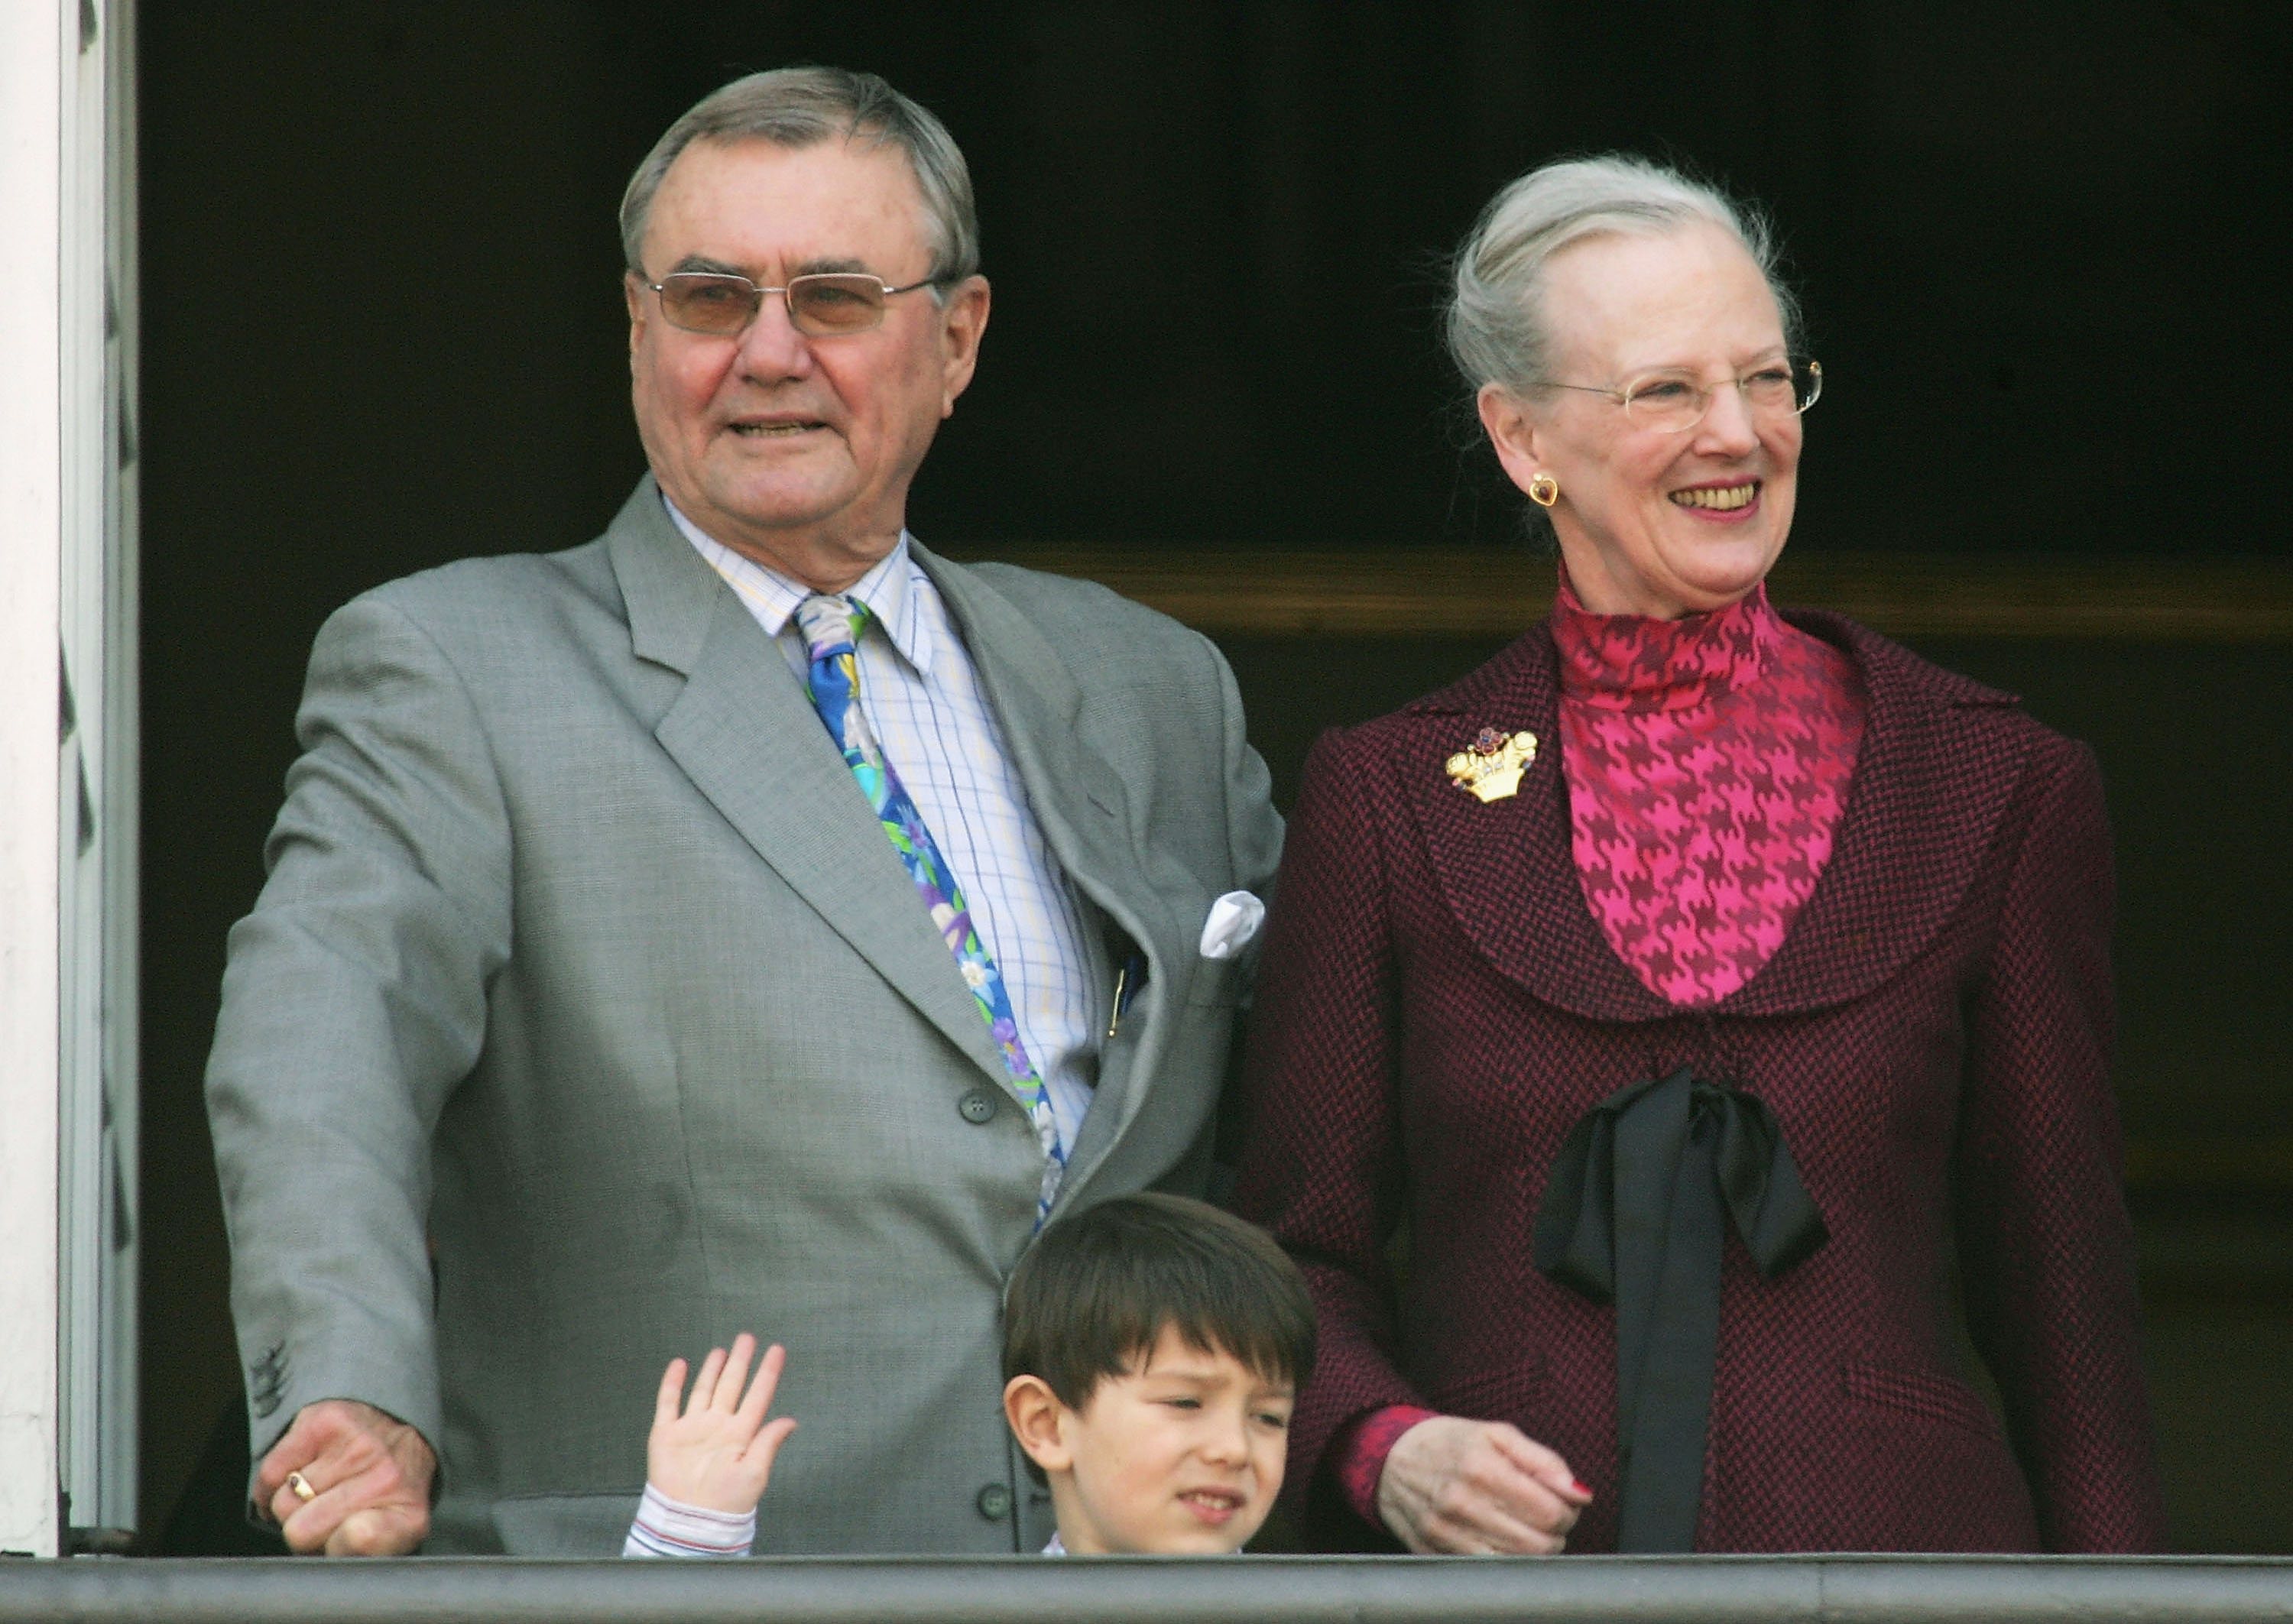 Queen Margrethe II Celebrates 65th Birthday